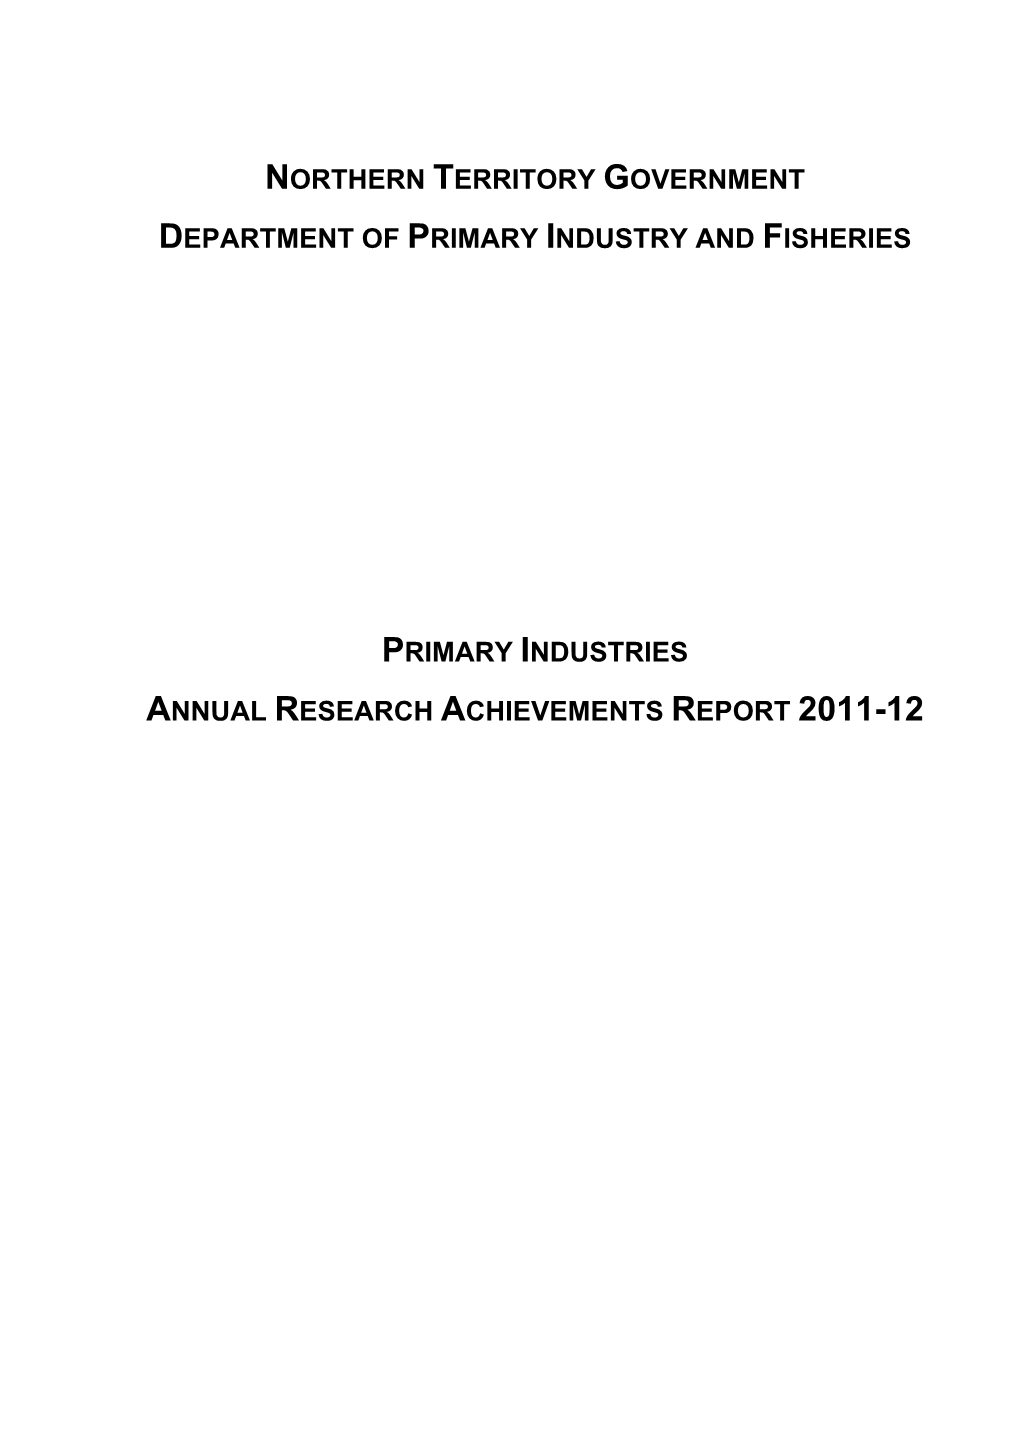 Primary Industries [PDF]